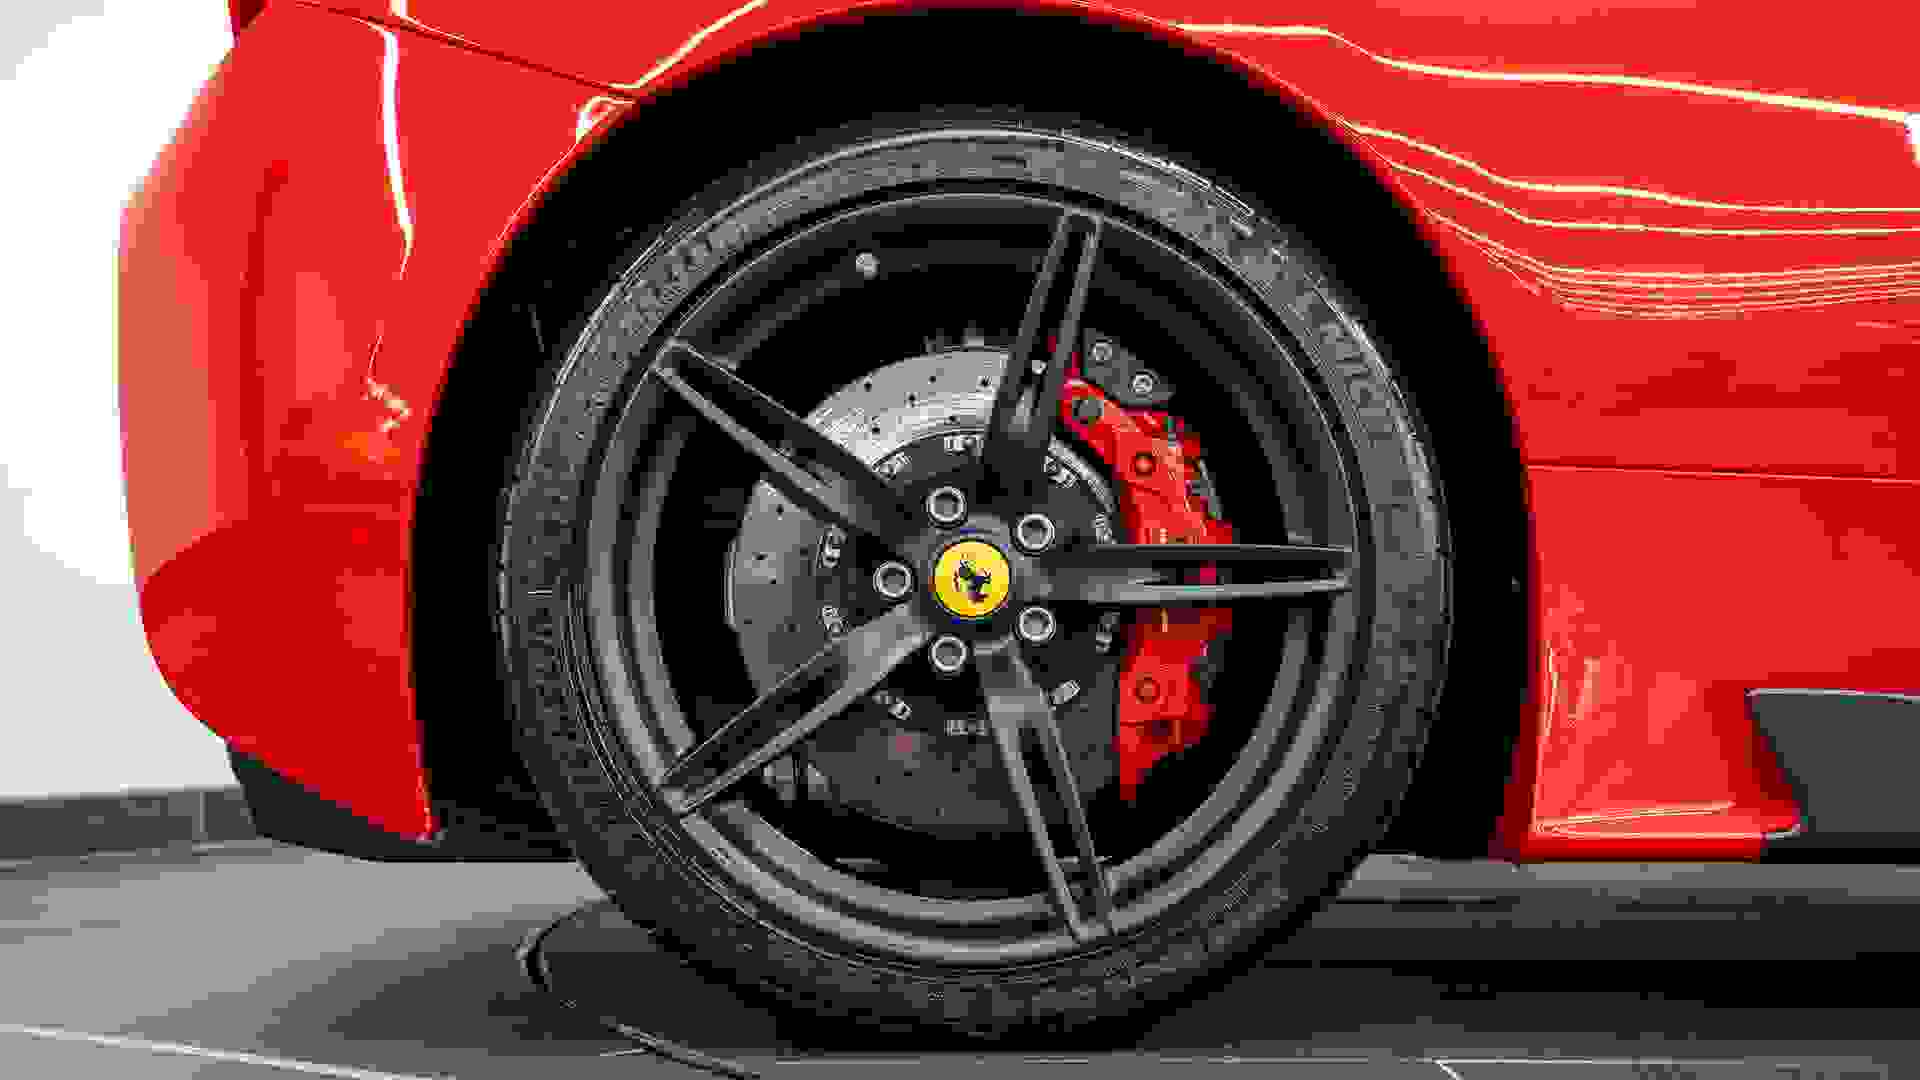 Ferrari 458 Photo 5c24a4af-2b02-4063-b54d-e8e9fa2fe513.jpg